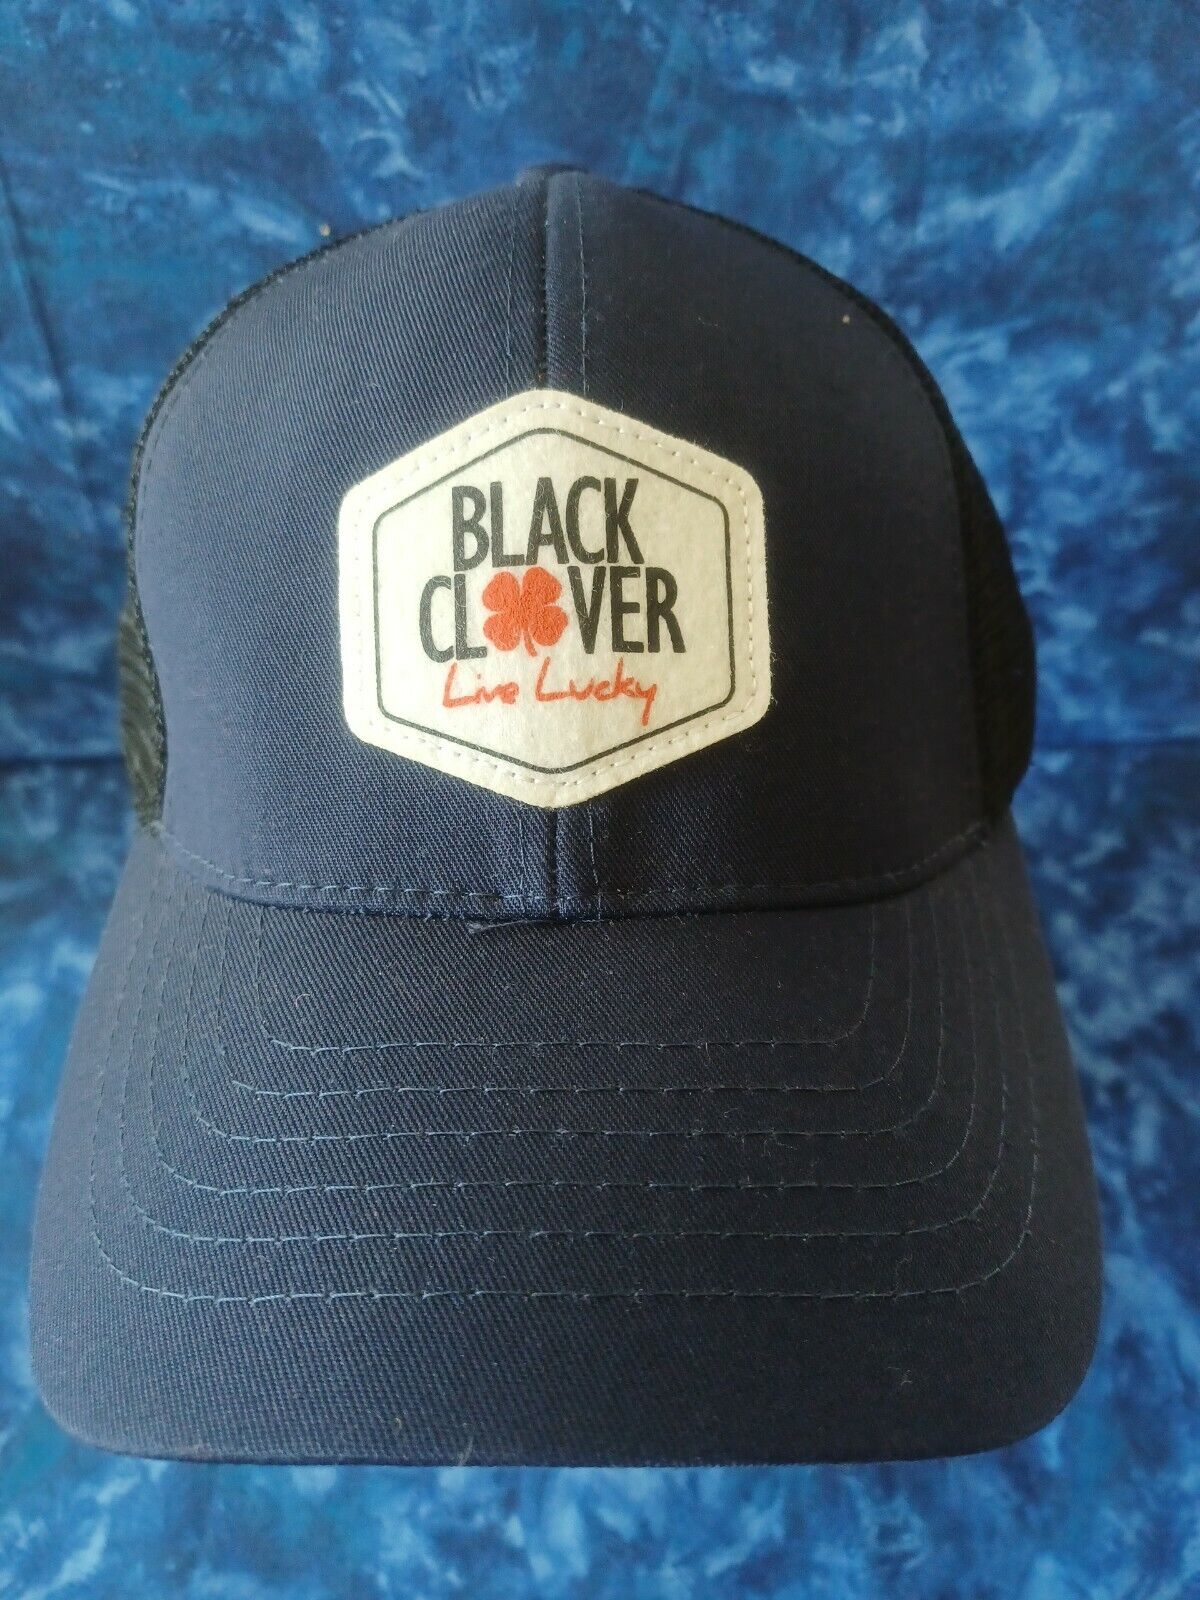 Black Clover Live Lucky Trucker Hat - Blue/Black - Gem